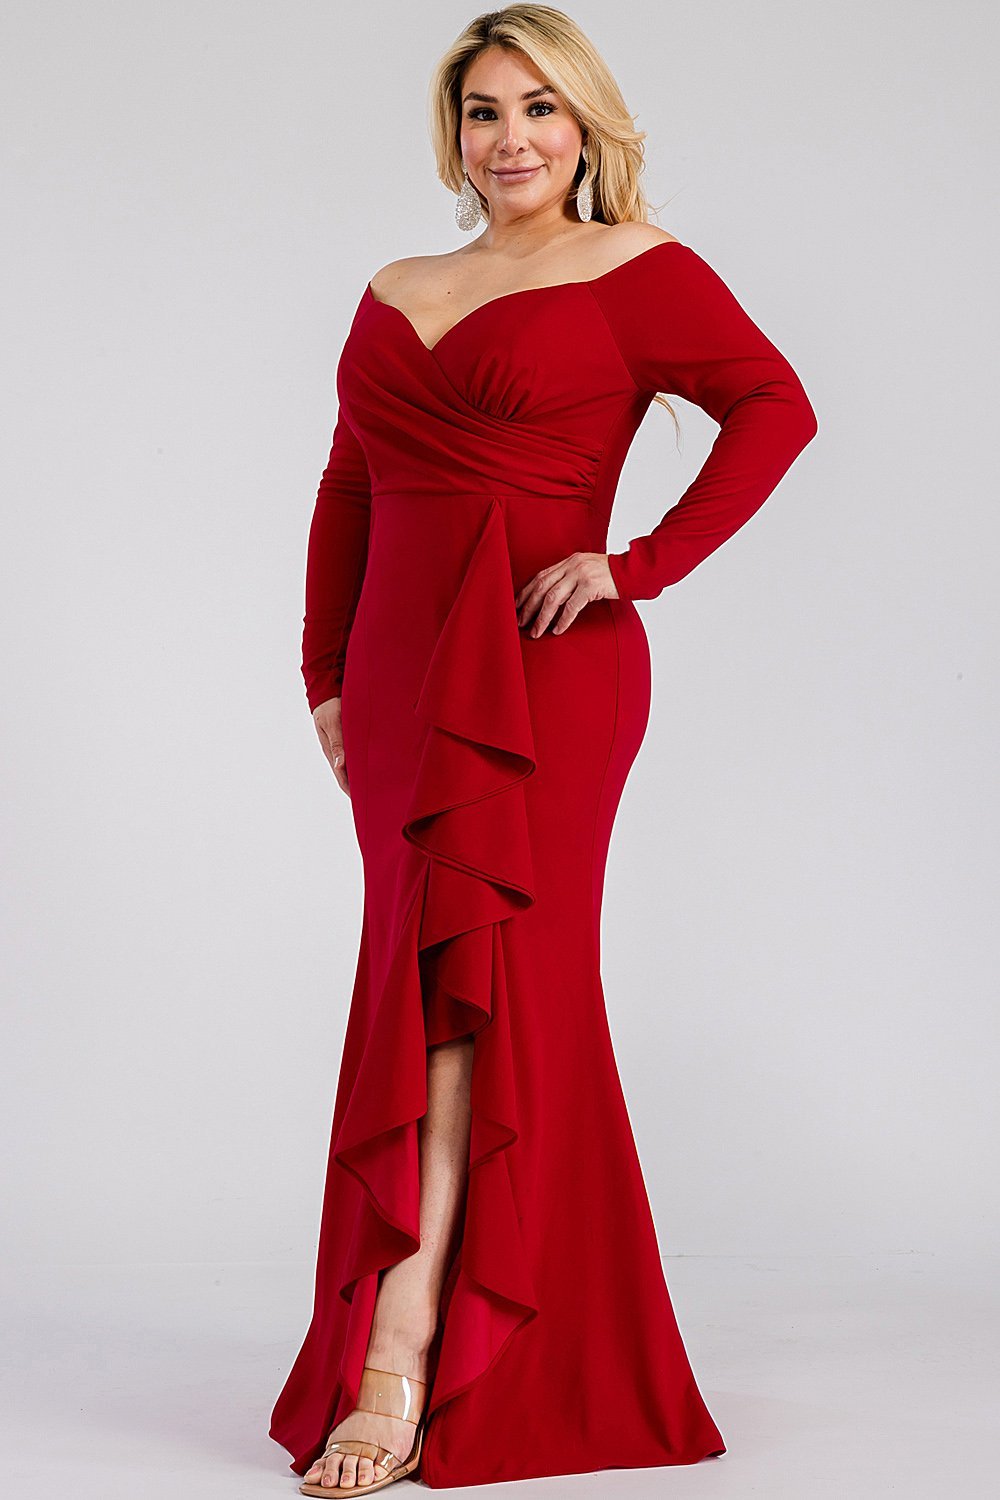 Hannia - rojo - Cindel vestidos maxi, midi, mini, para toda ocasion, largos, de fiesta, de boda